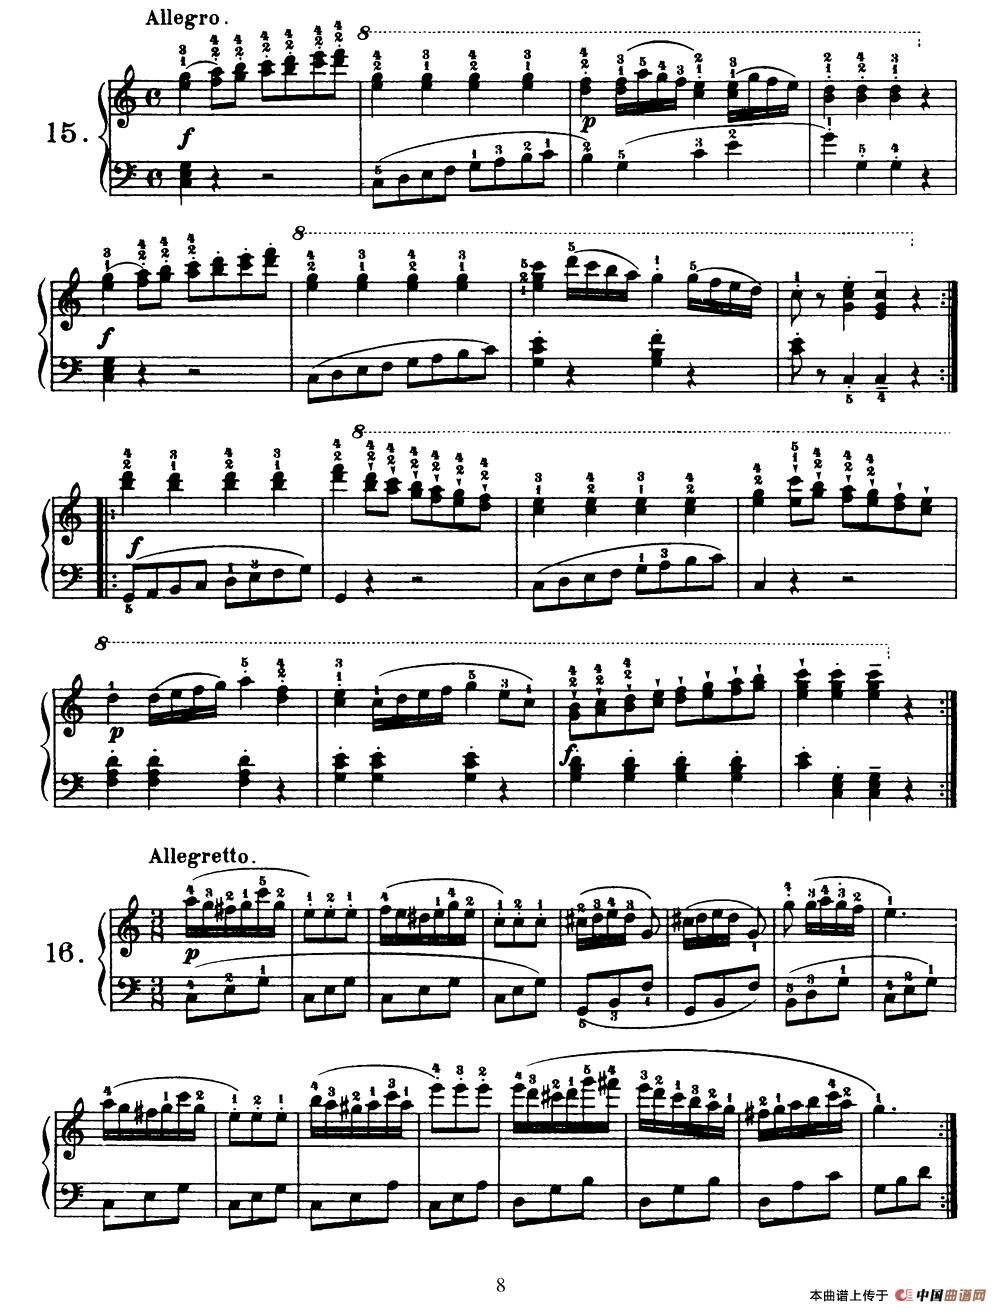 One Hundred and Ten Easy and Progressive Exercises Op.453（车尔尼110首简易练习曲 11——20）钢琴谱